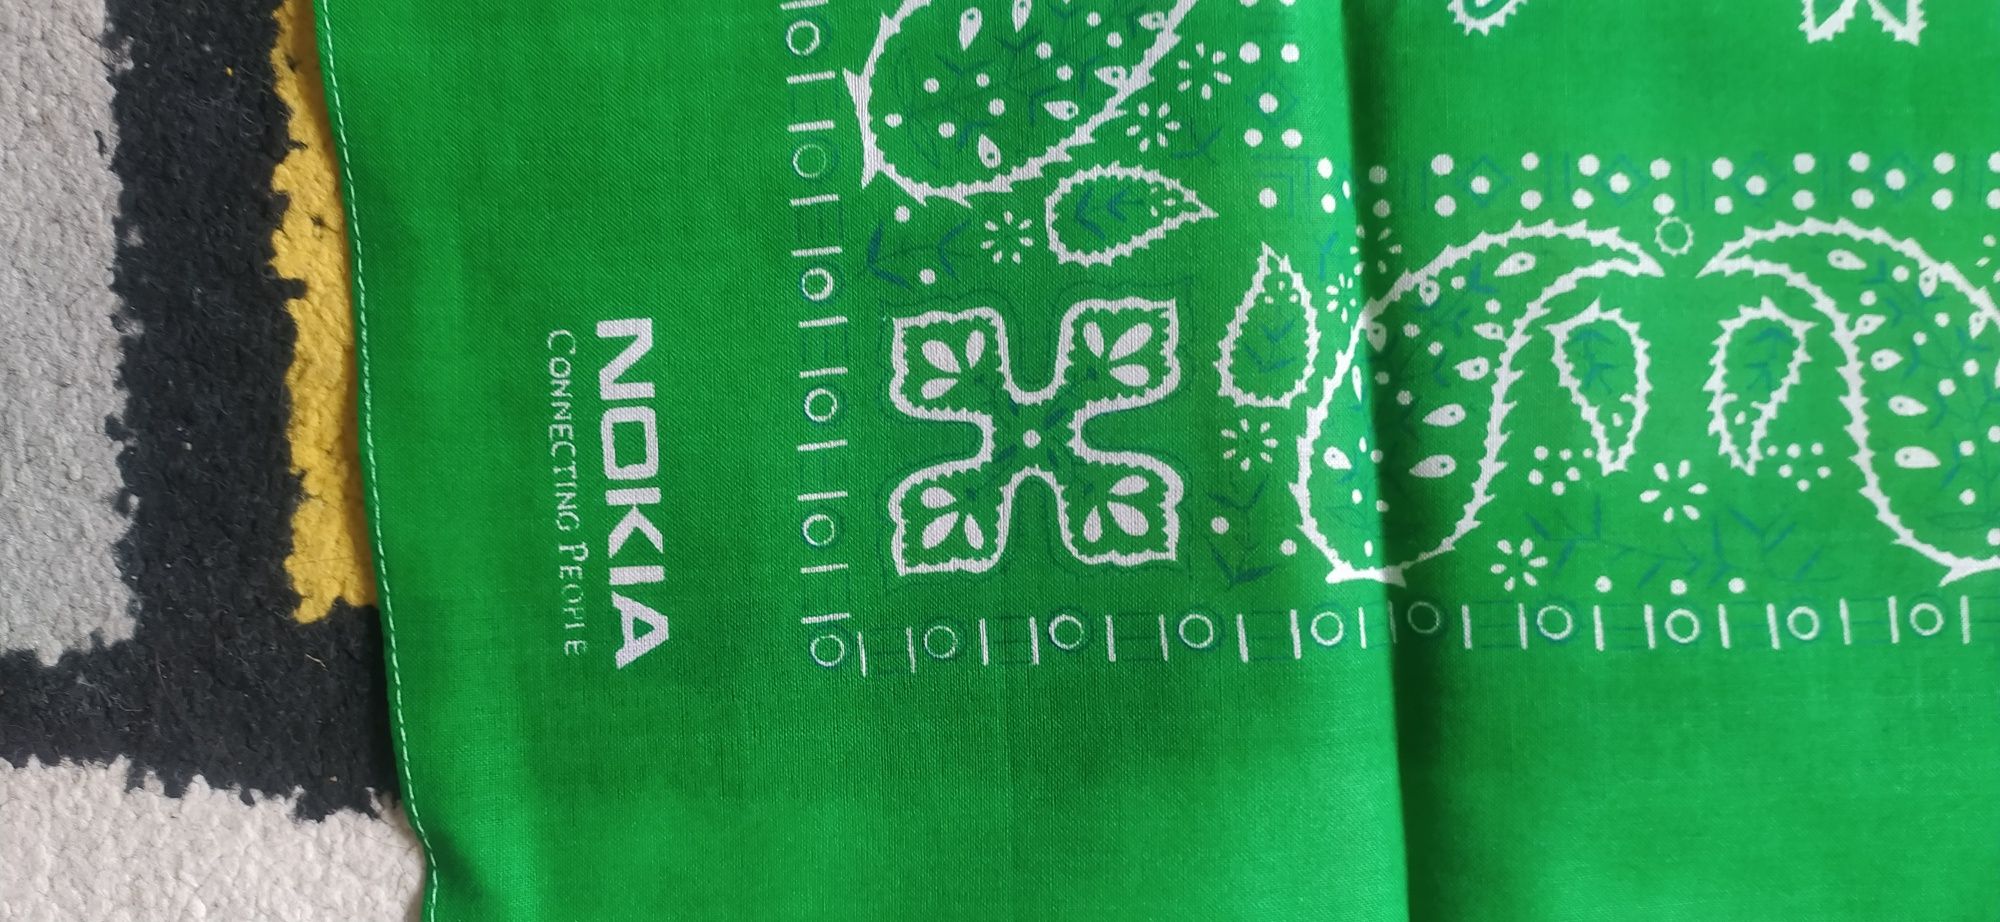 Chusta bandana z logo Nokia